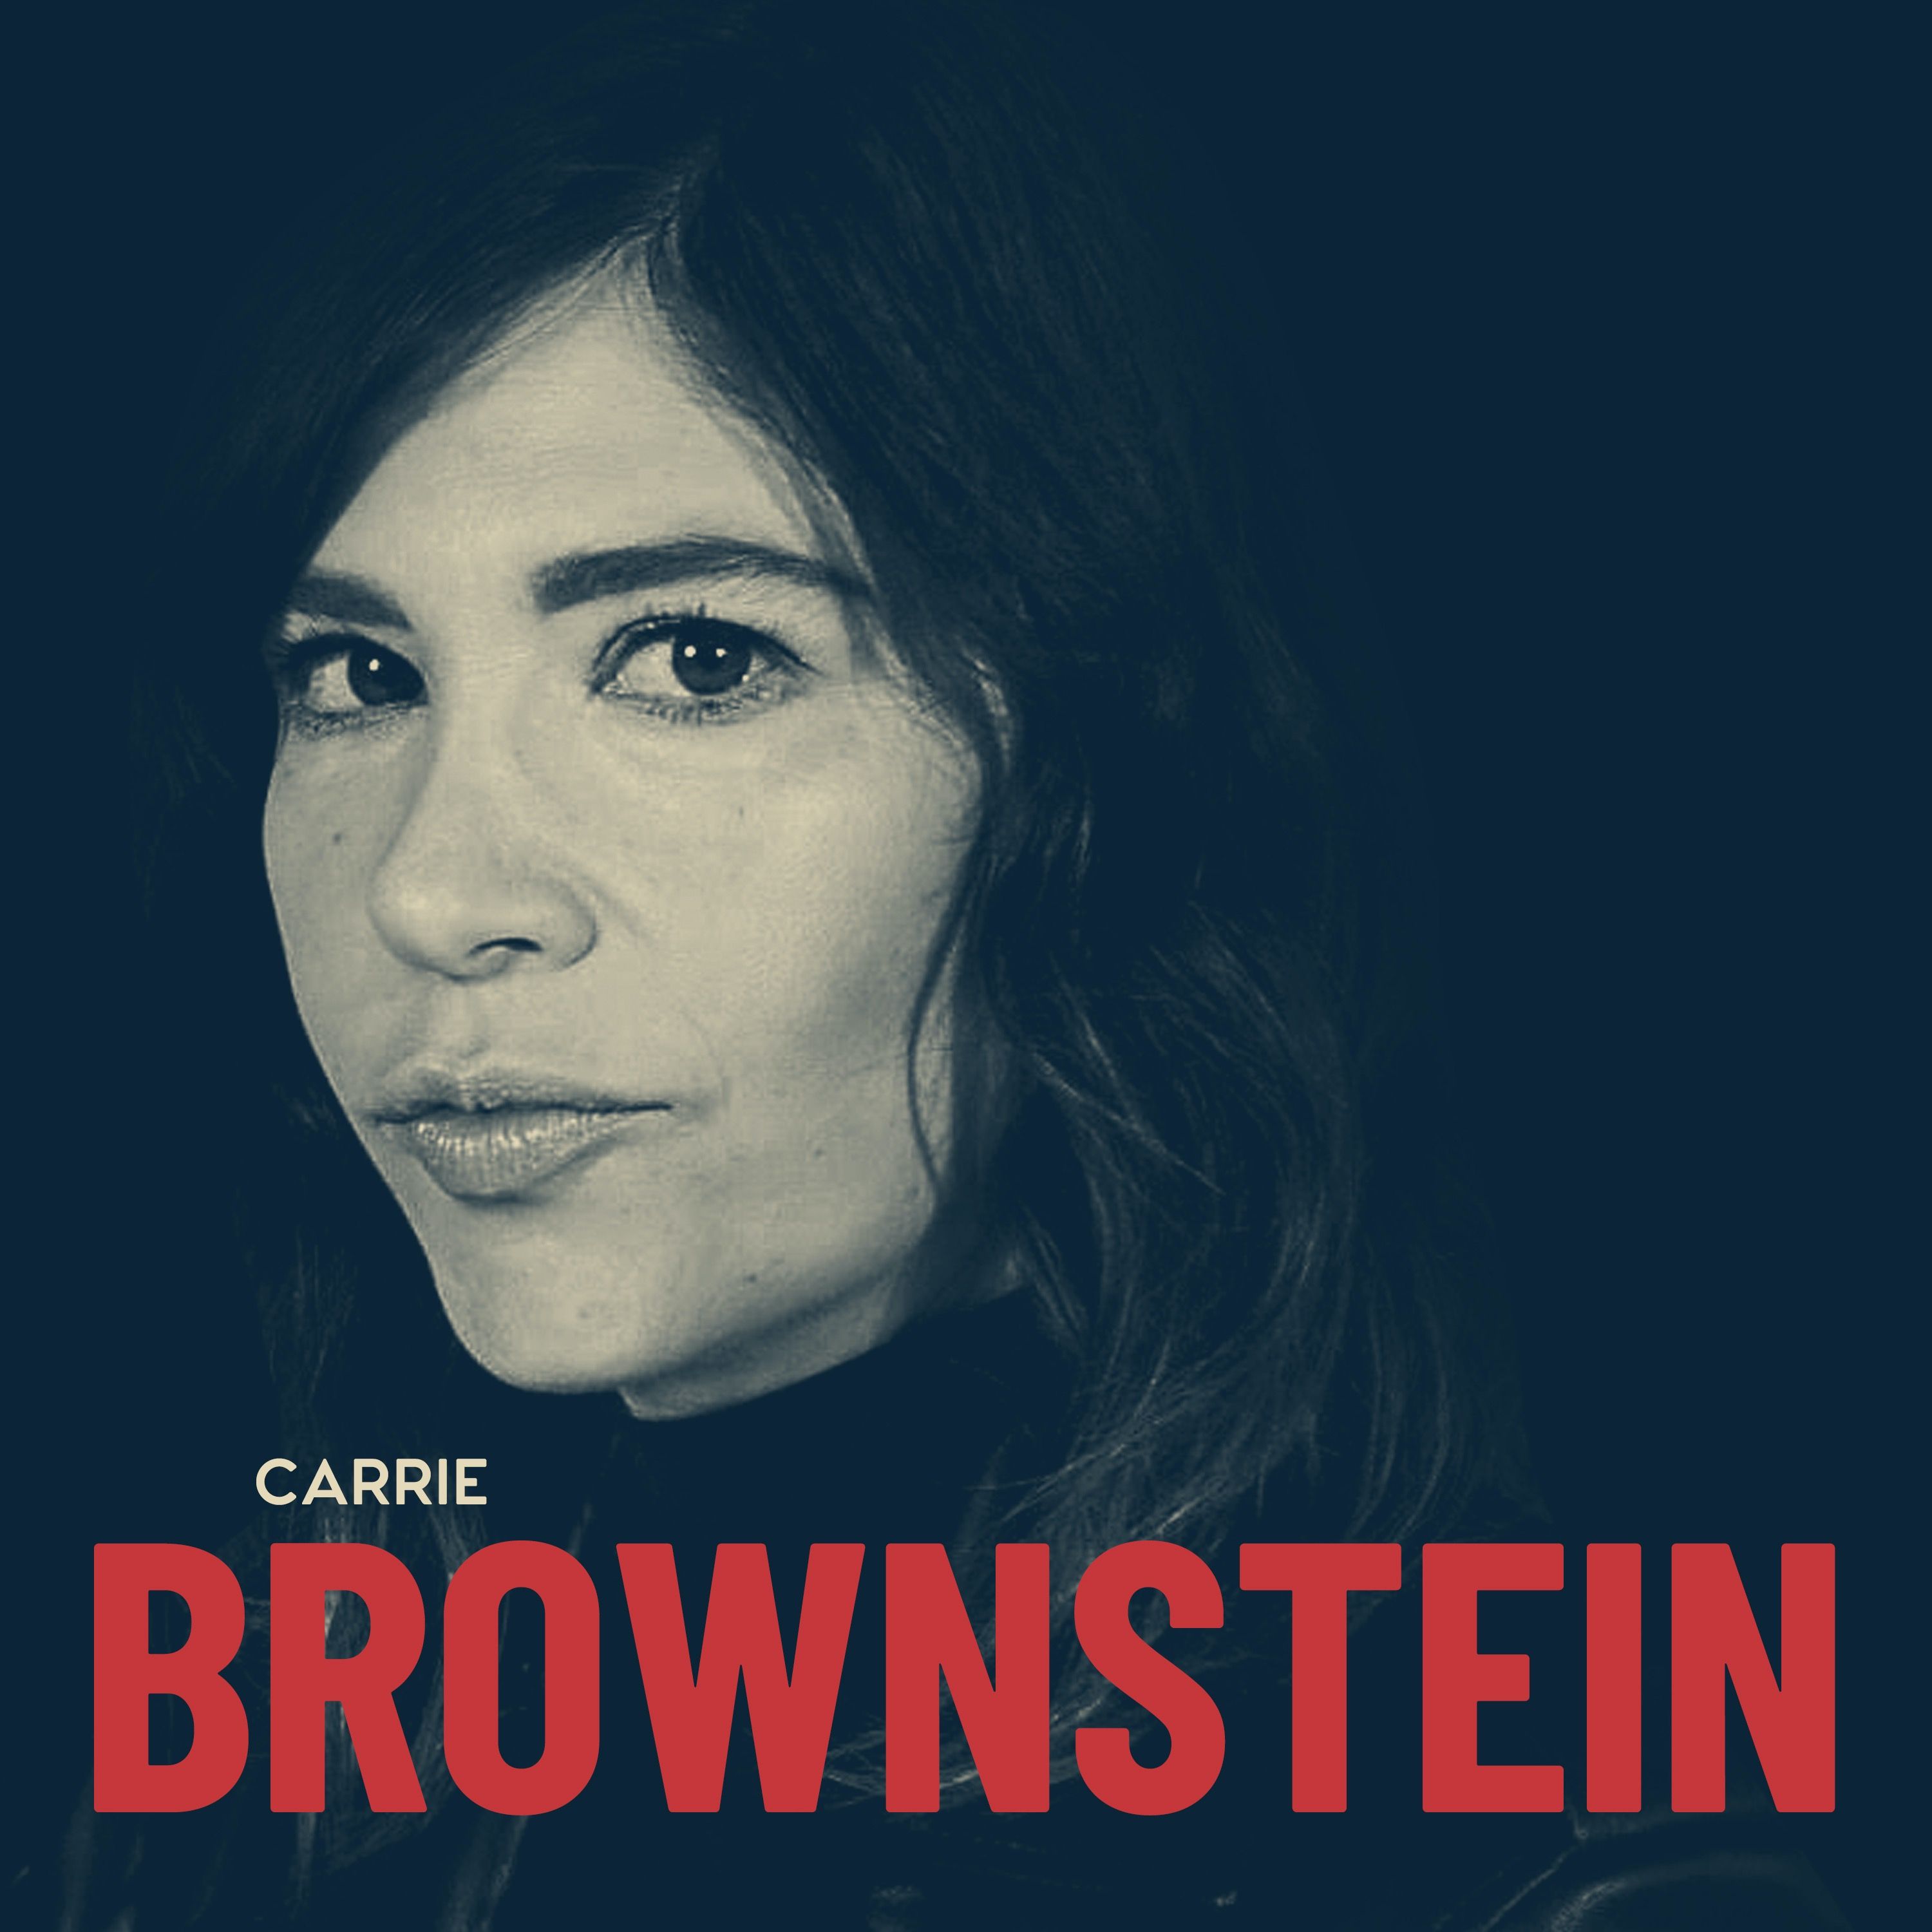 Carrie Brownstein